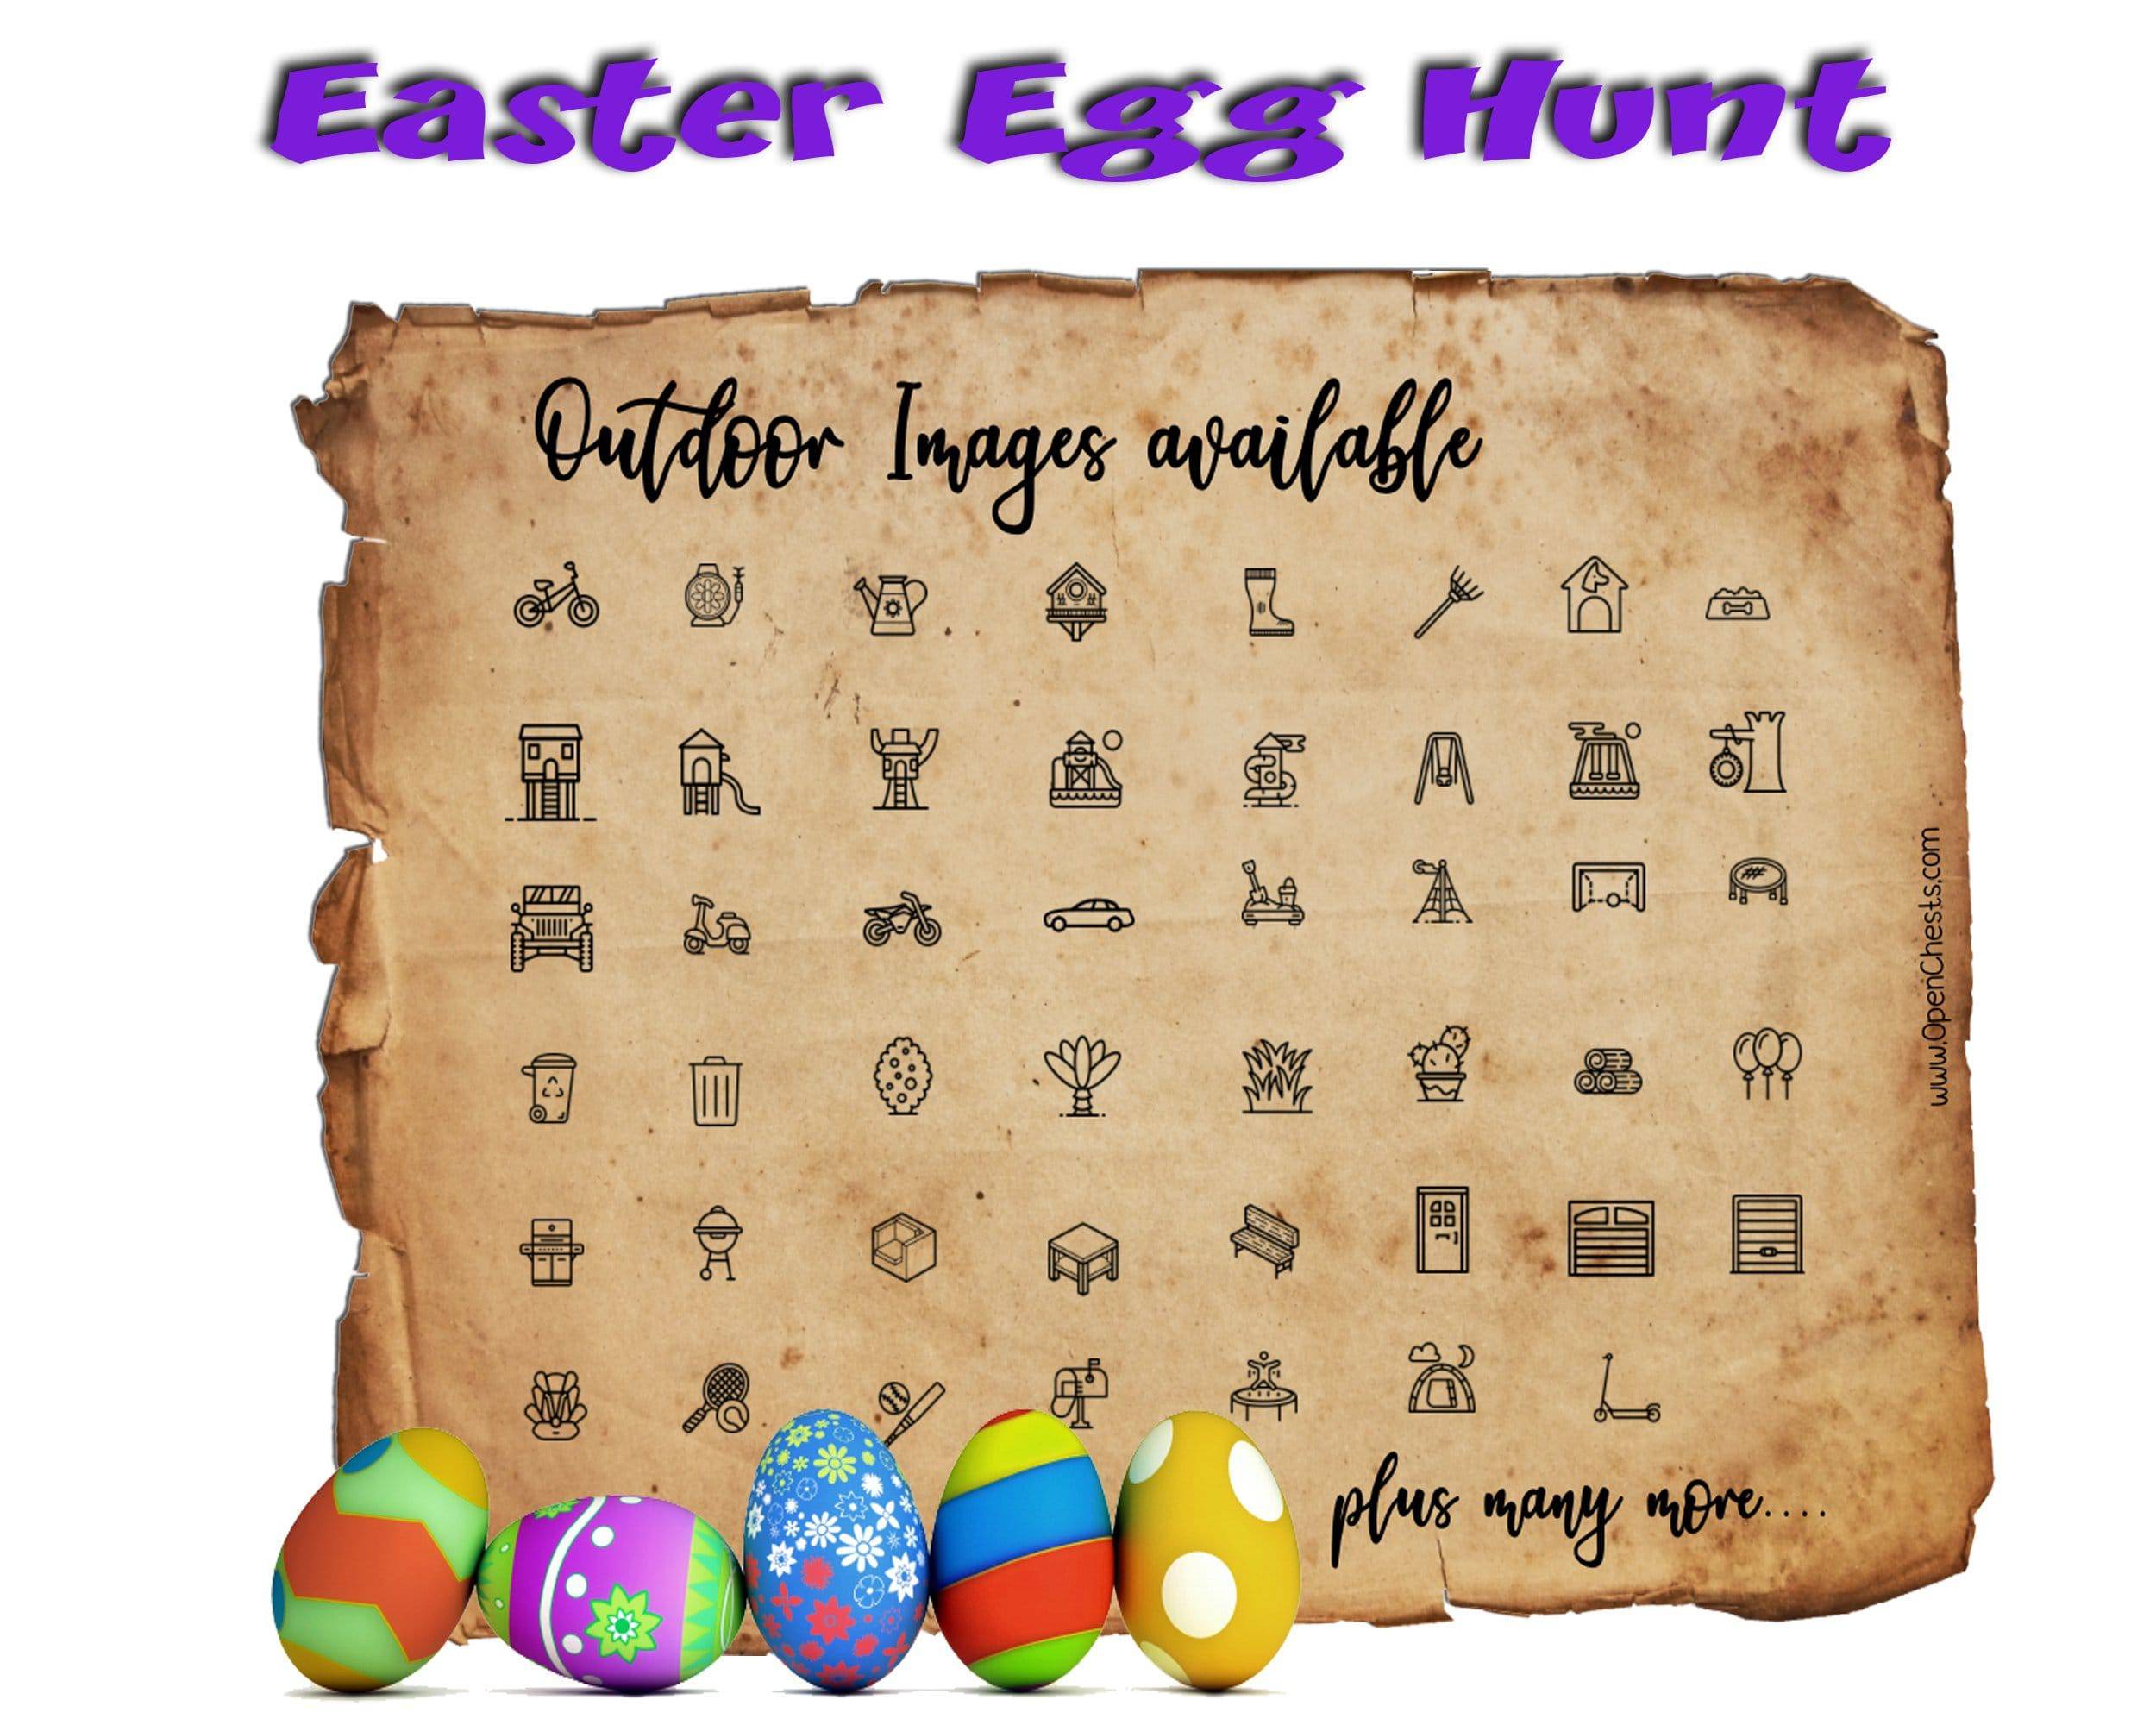 Easter Egg Hunt Map Printable | Indoor Treasure Hunt for Children - Open Chests